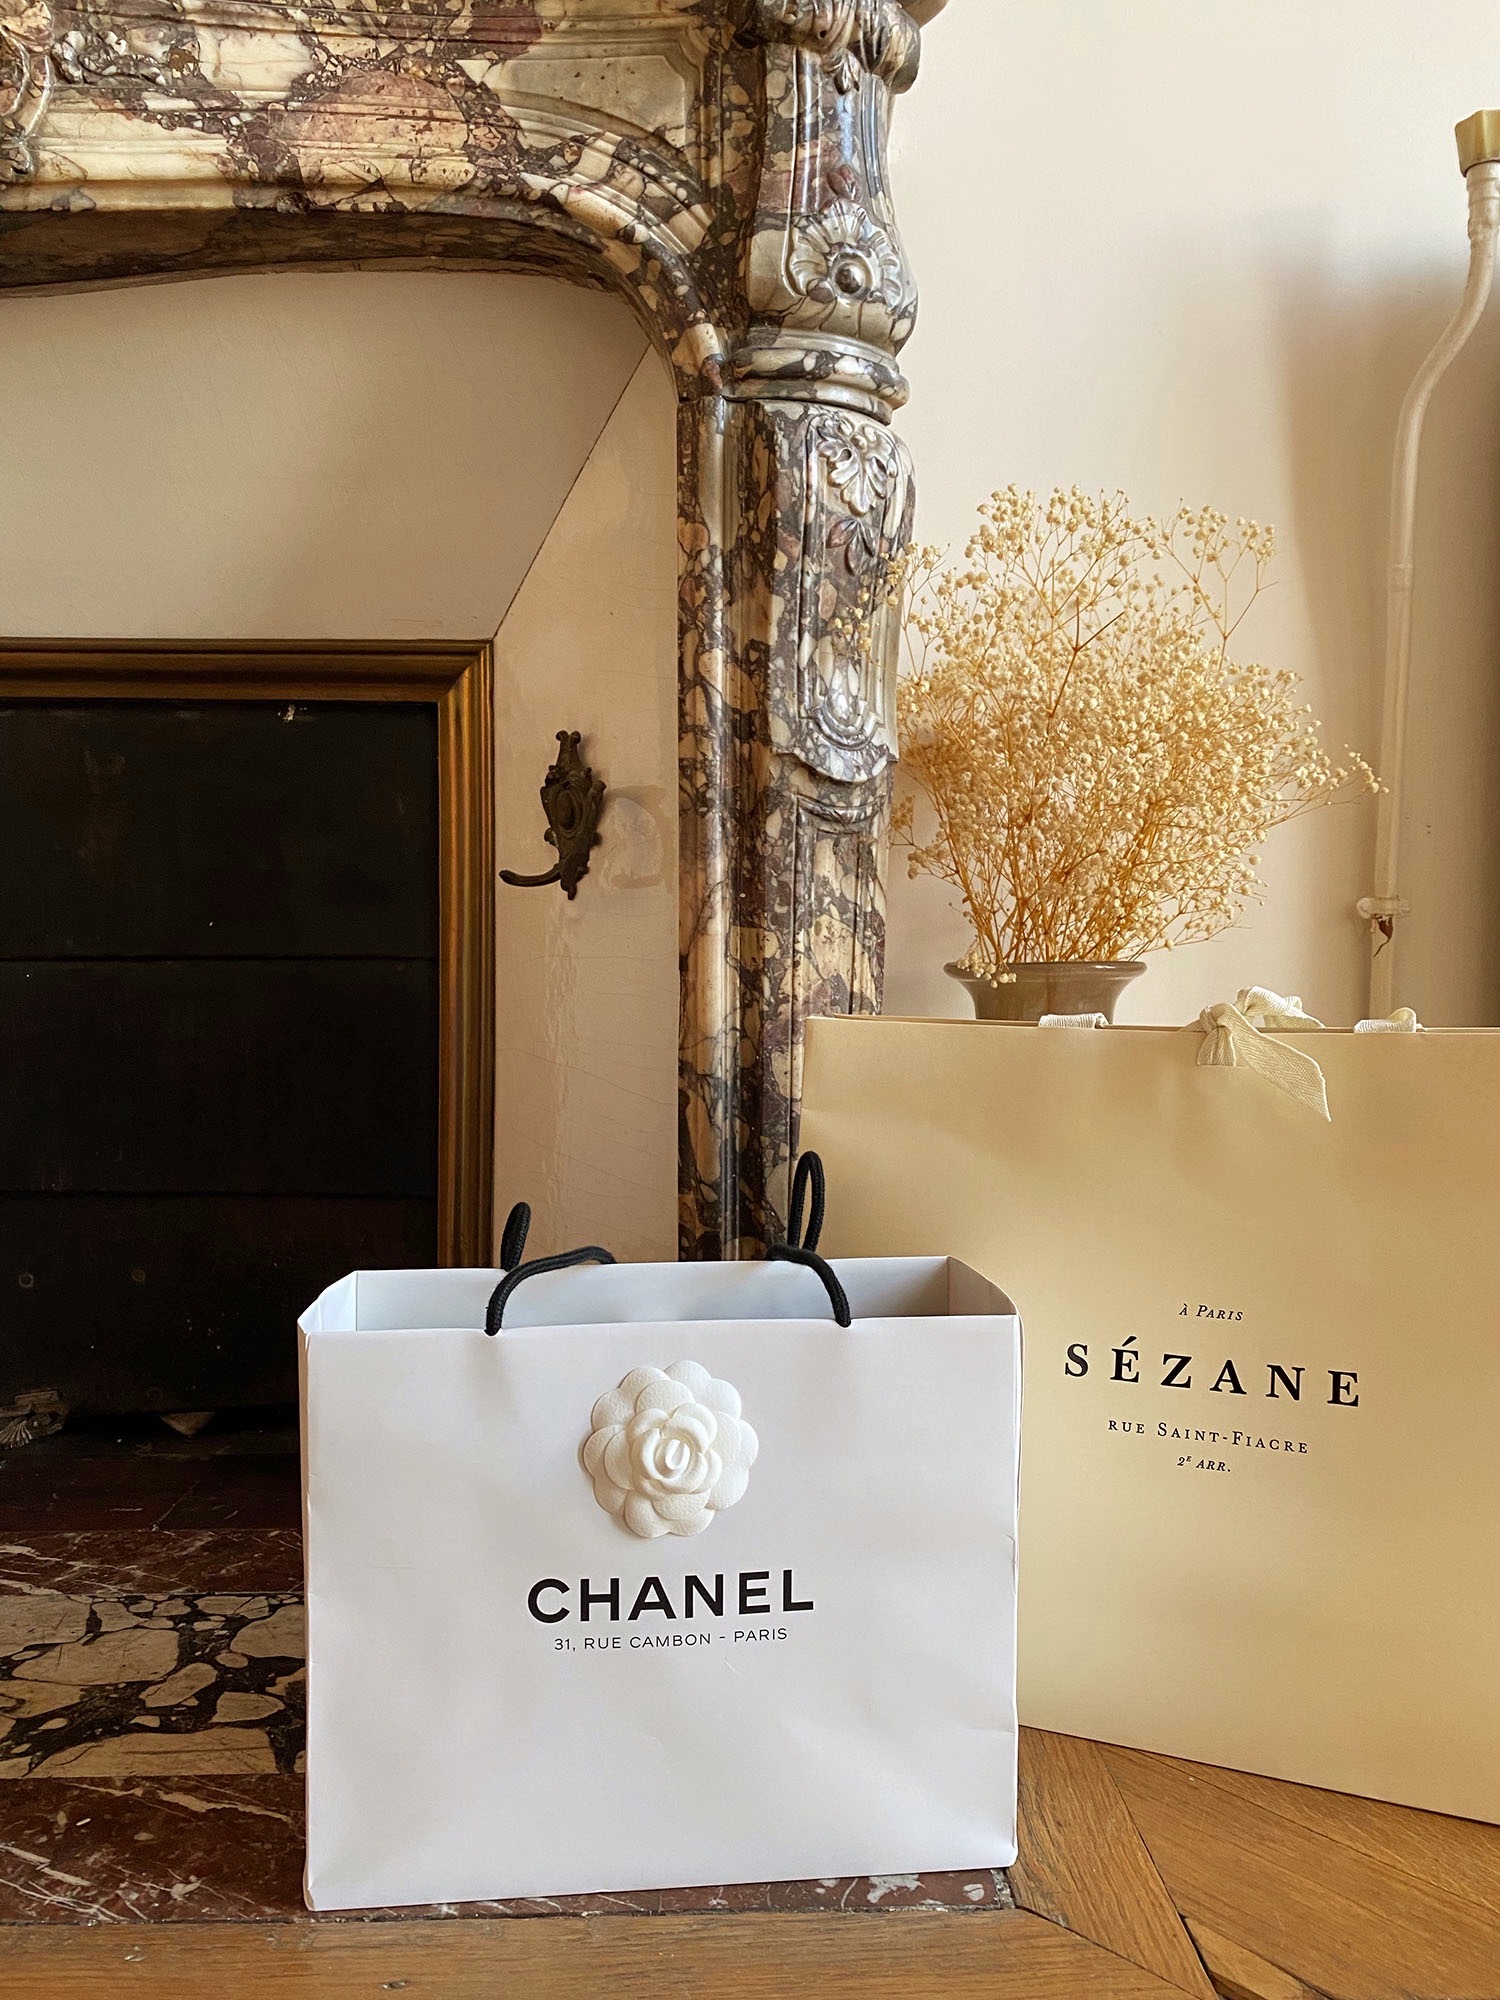 Coco & Vera - Sezane shopping bag, Chanel shopping bag